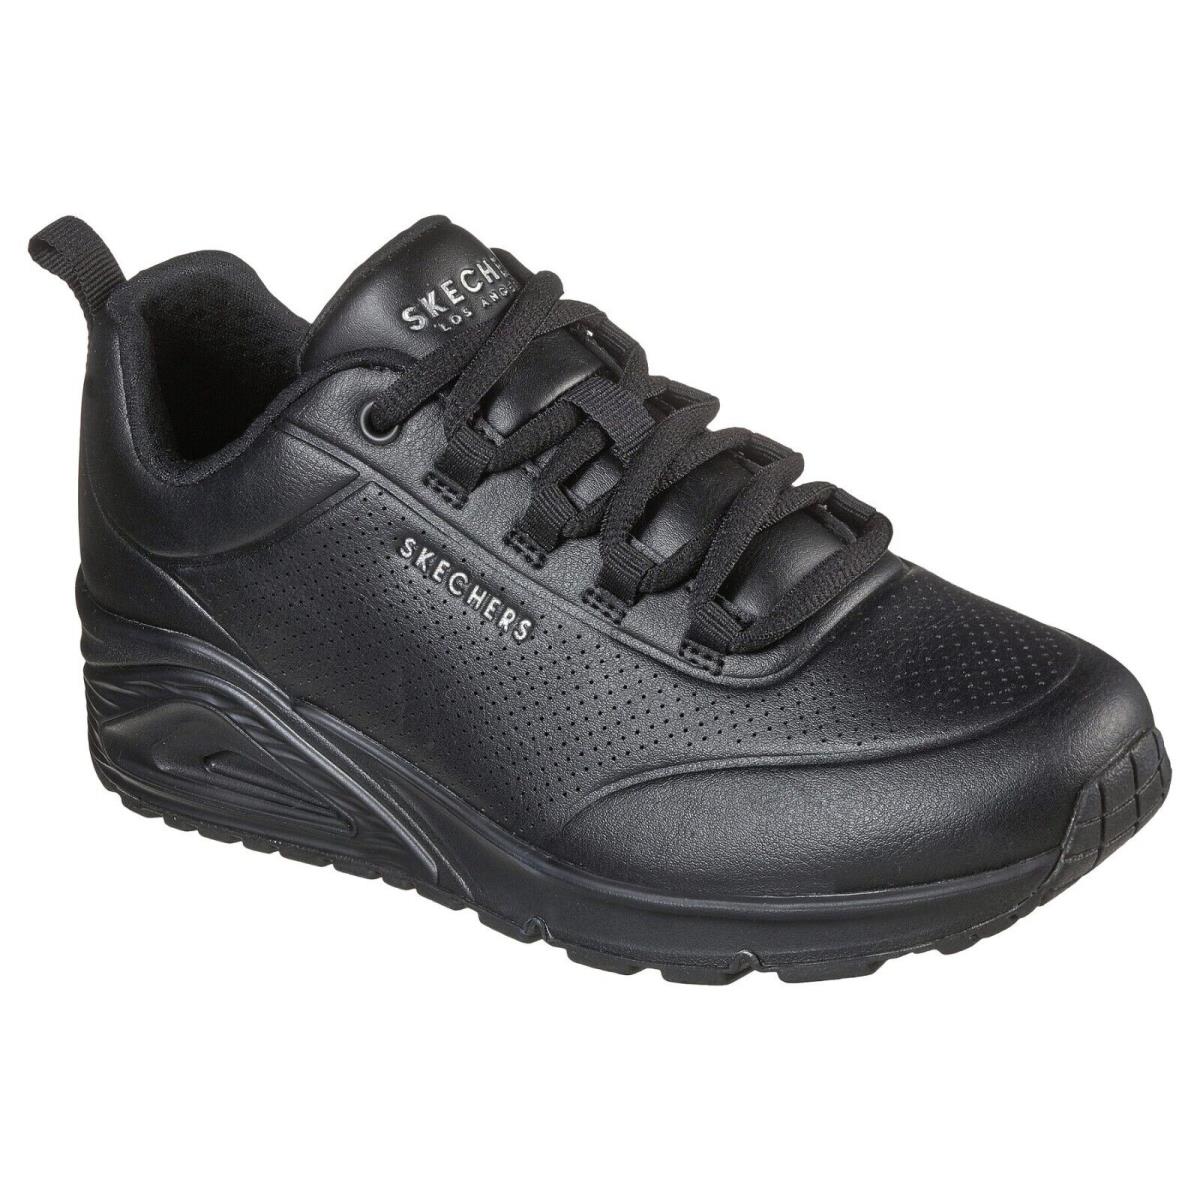 Skechers shoes Juno Linked Core - Black 4